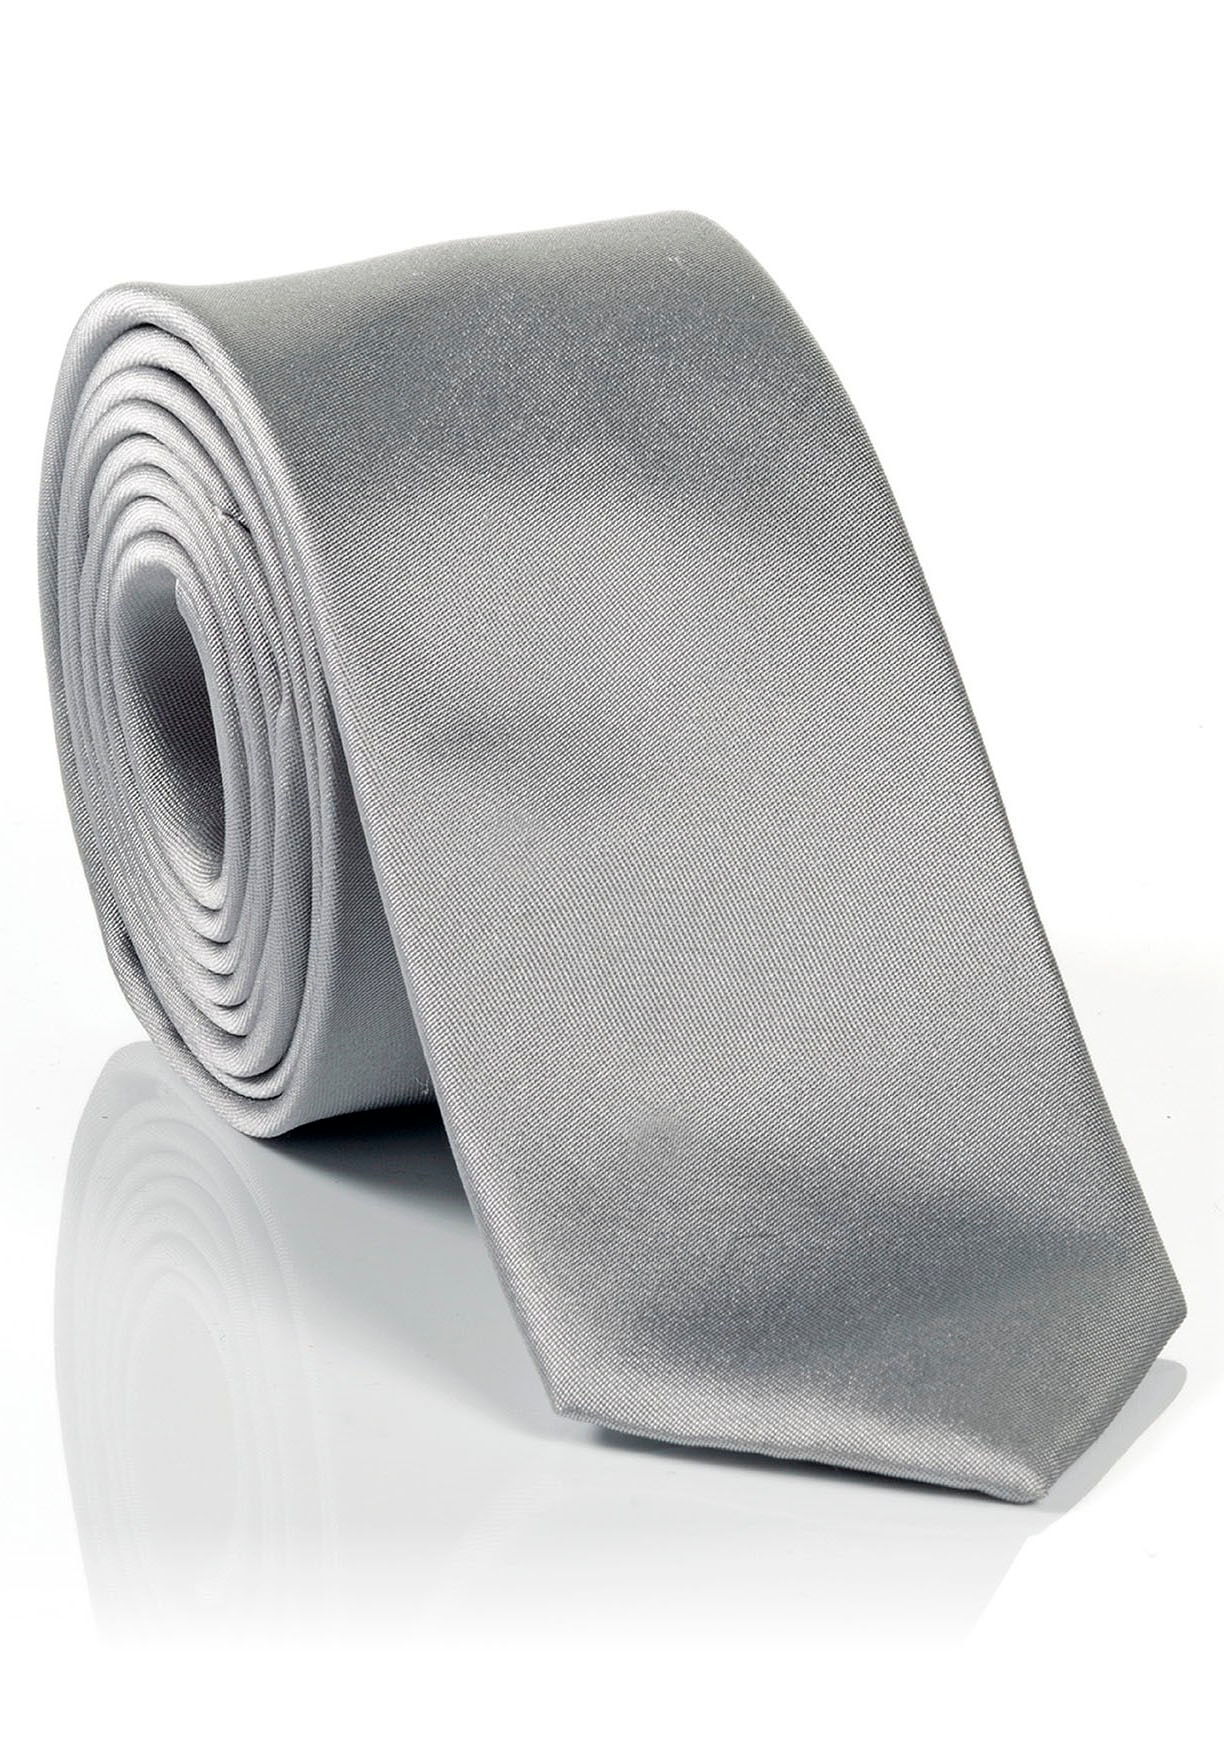 ➤ Krawatten versandkostenfrei shoppen